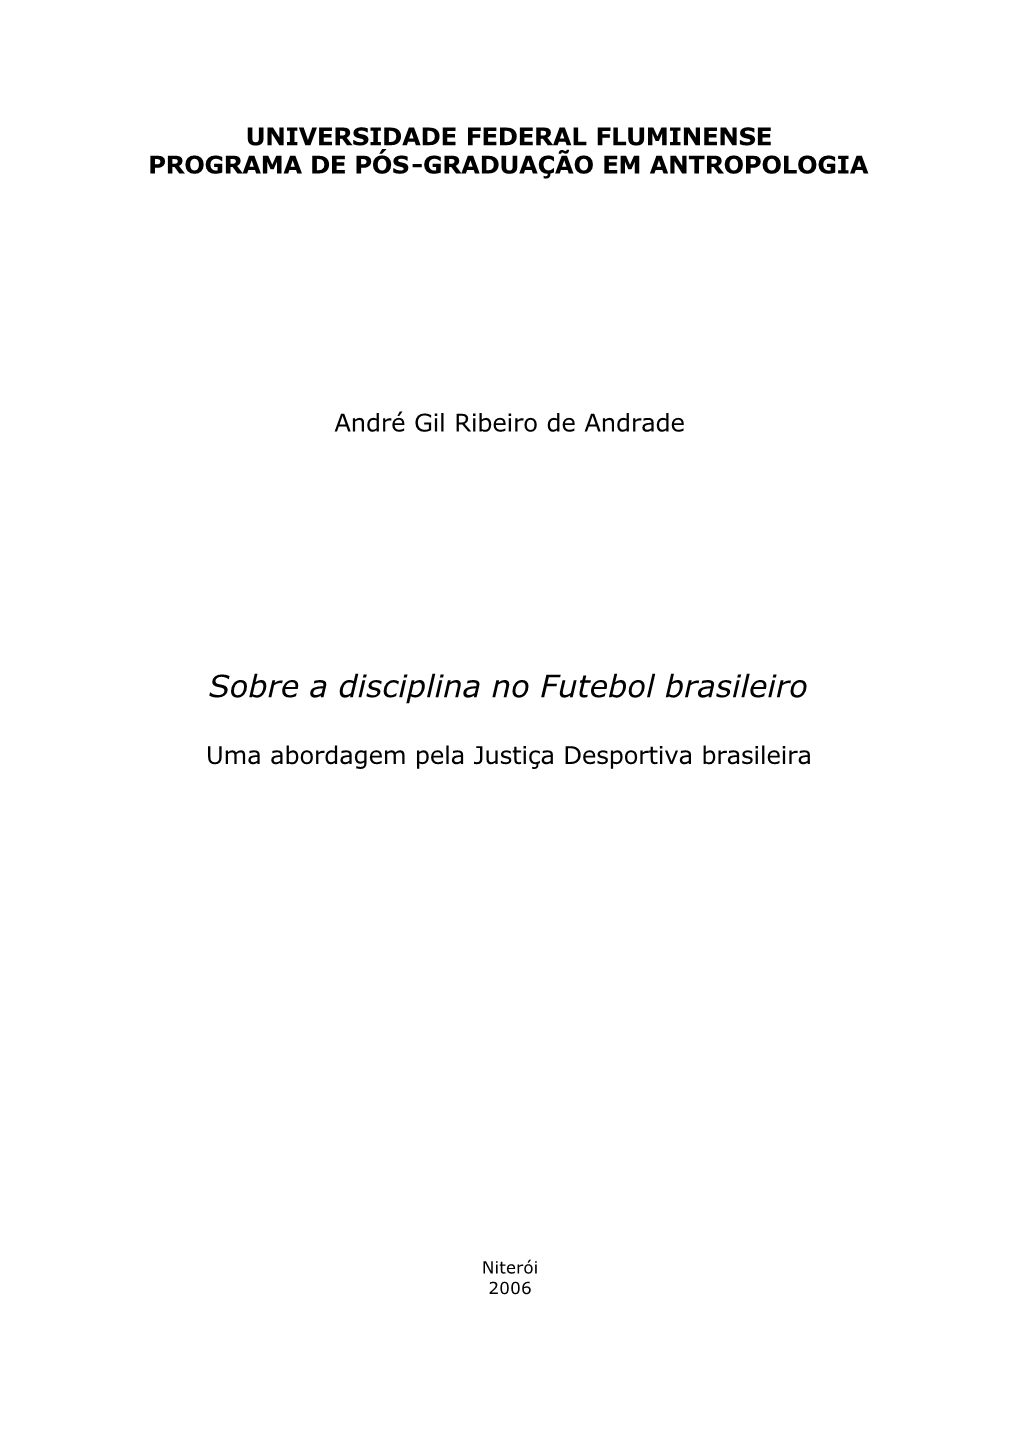 Sobre a Disciplina No Futebol Brasileiro